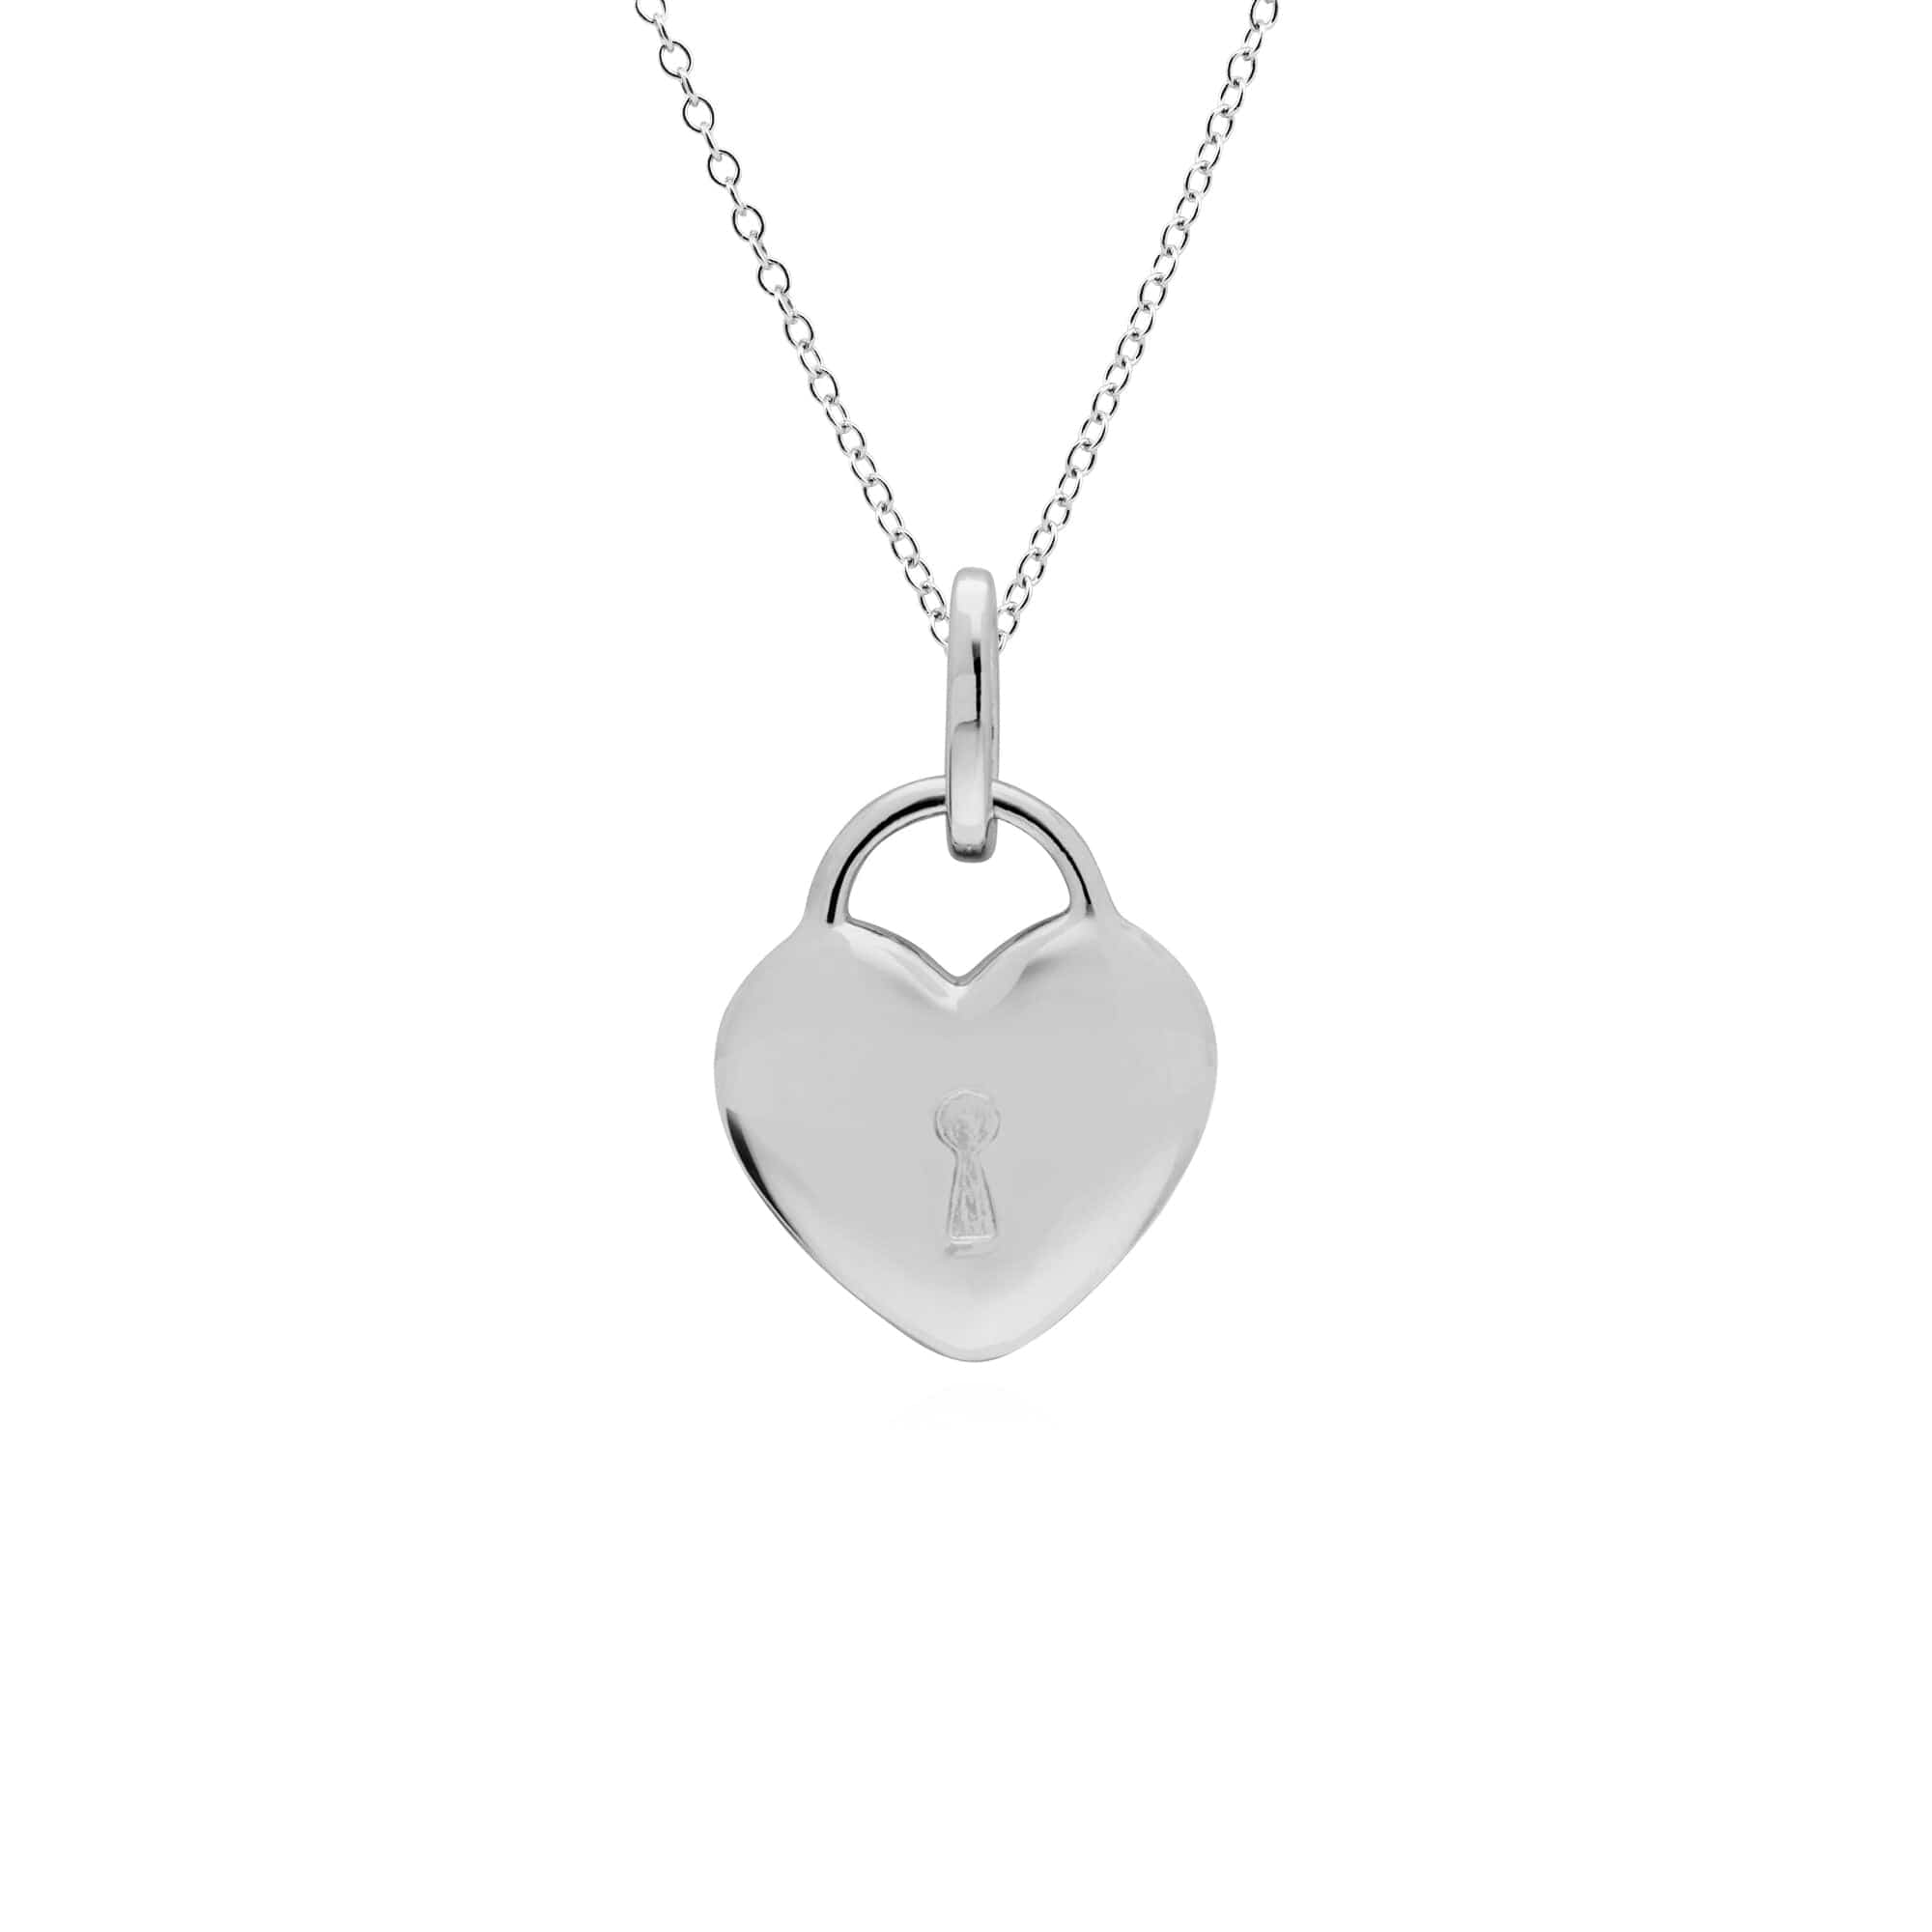 270P026802925-270P027001925 Classic Heart Lock Pendant & Jade Big Key Charm in 925 Sterling Silver 3